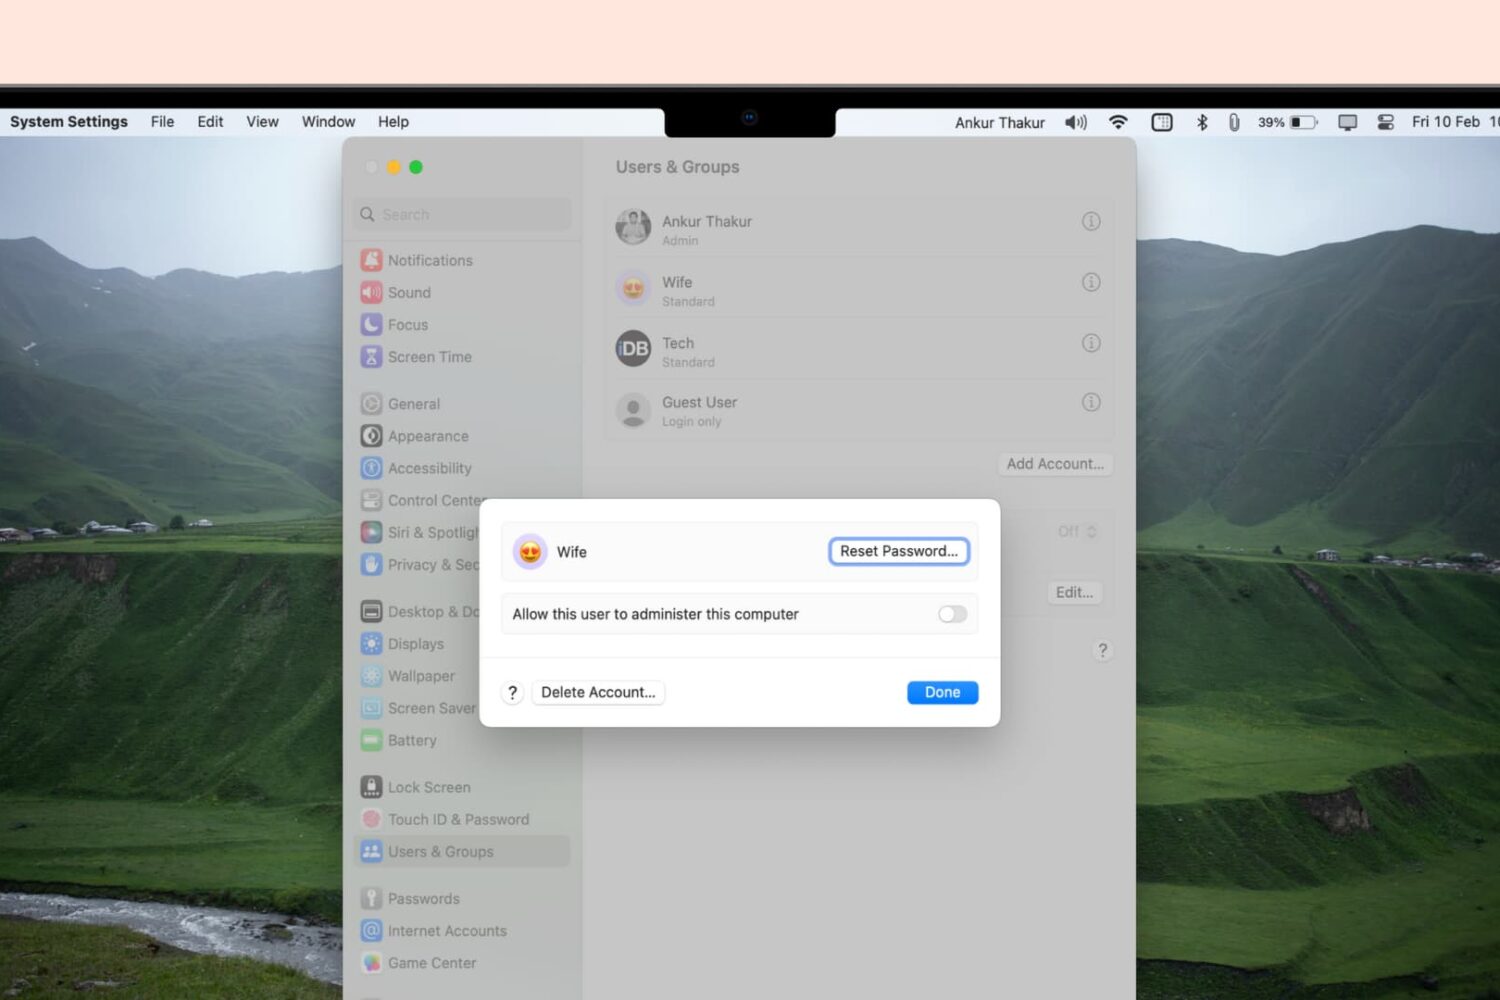 Delete user account on Mac